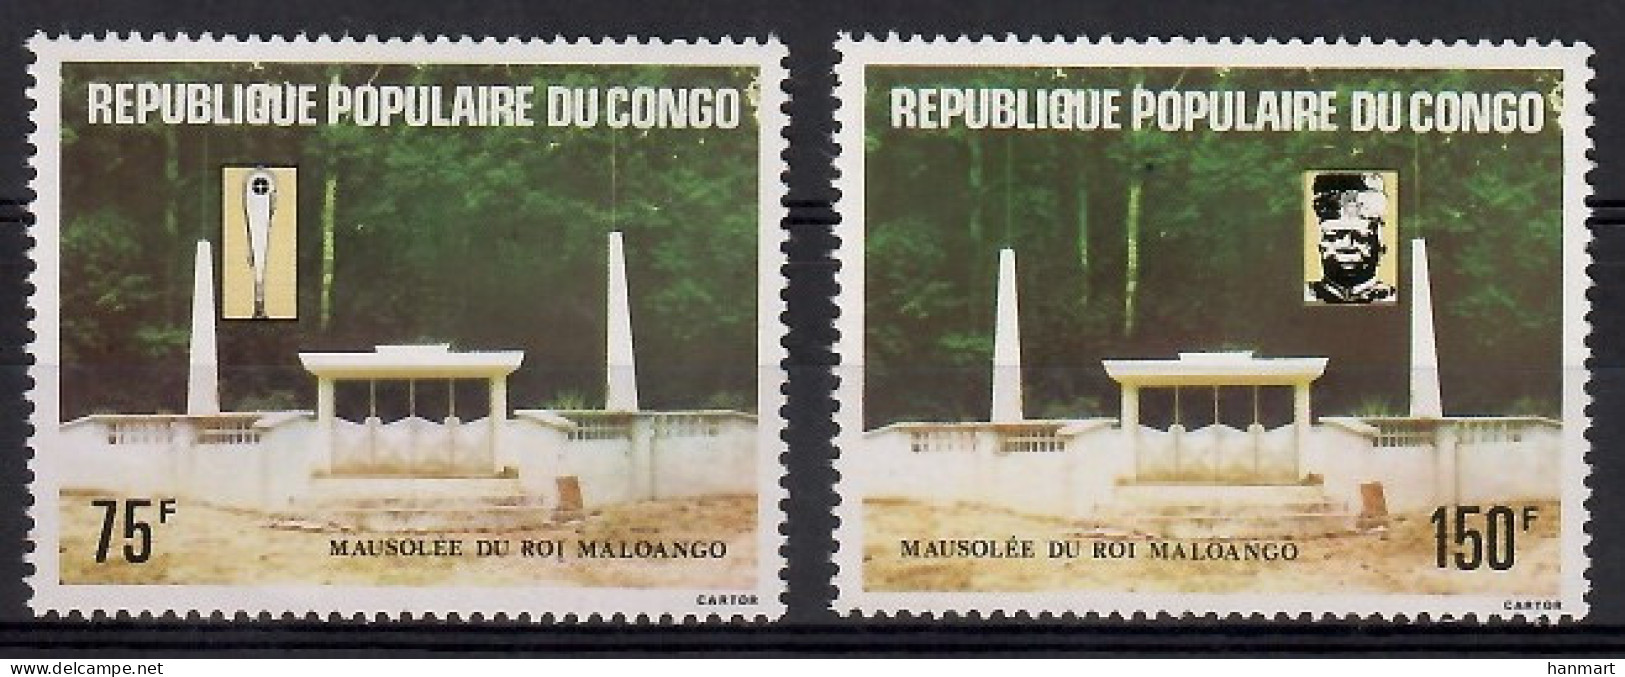 Congo, Republic (Brazzaville) 1981 Mi 825-826 MNH  (ZS6 CNG825-826) - Sculpture